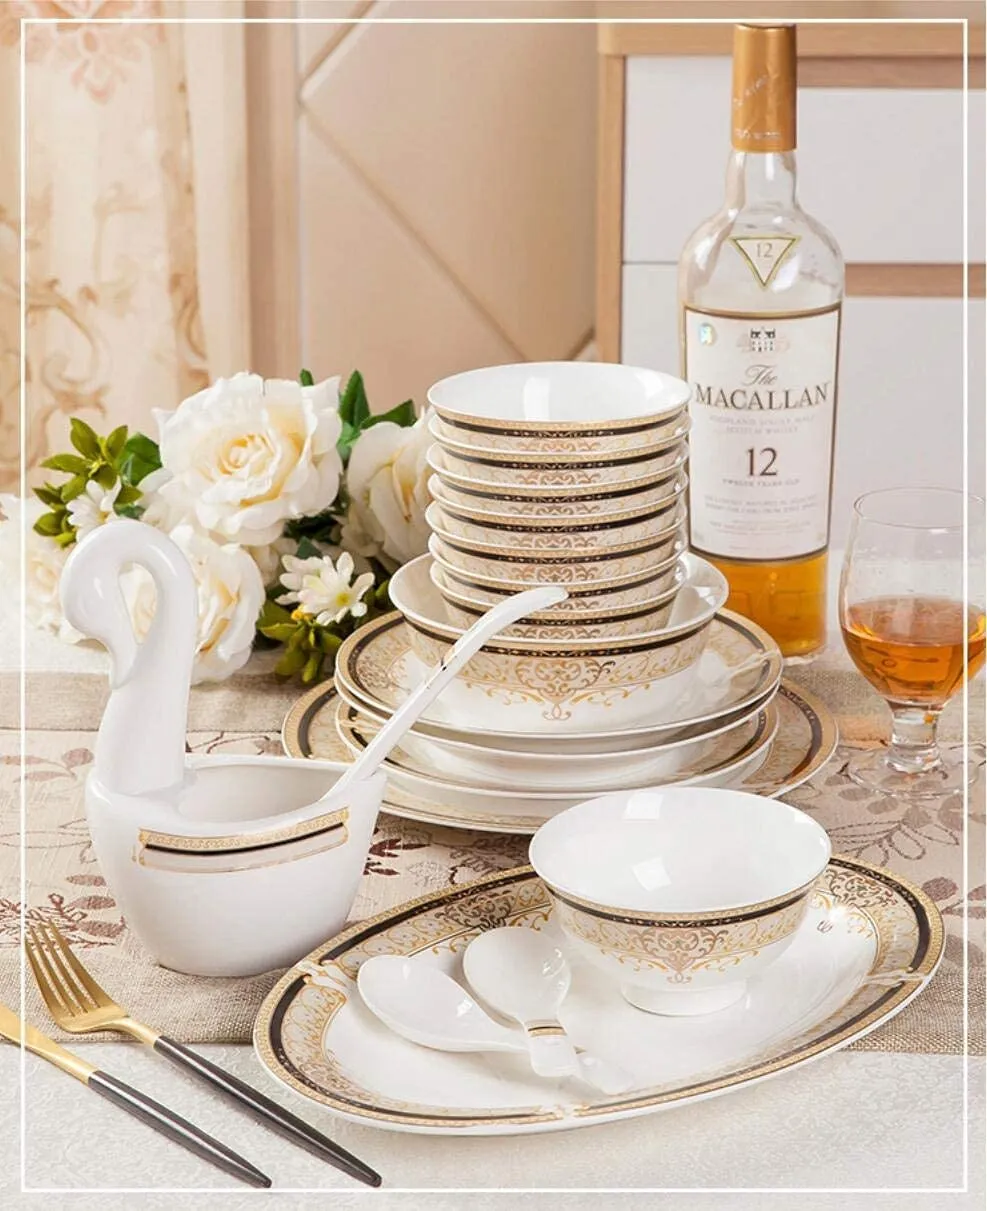 60 Piece Porcelain Dinnerware Set, Plate and Bowl Set, European-Style Elegant Tableware Set, Jingdezhen Bone China Dish Set, Service for 8-10